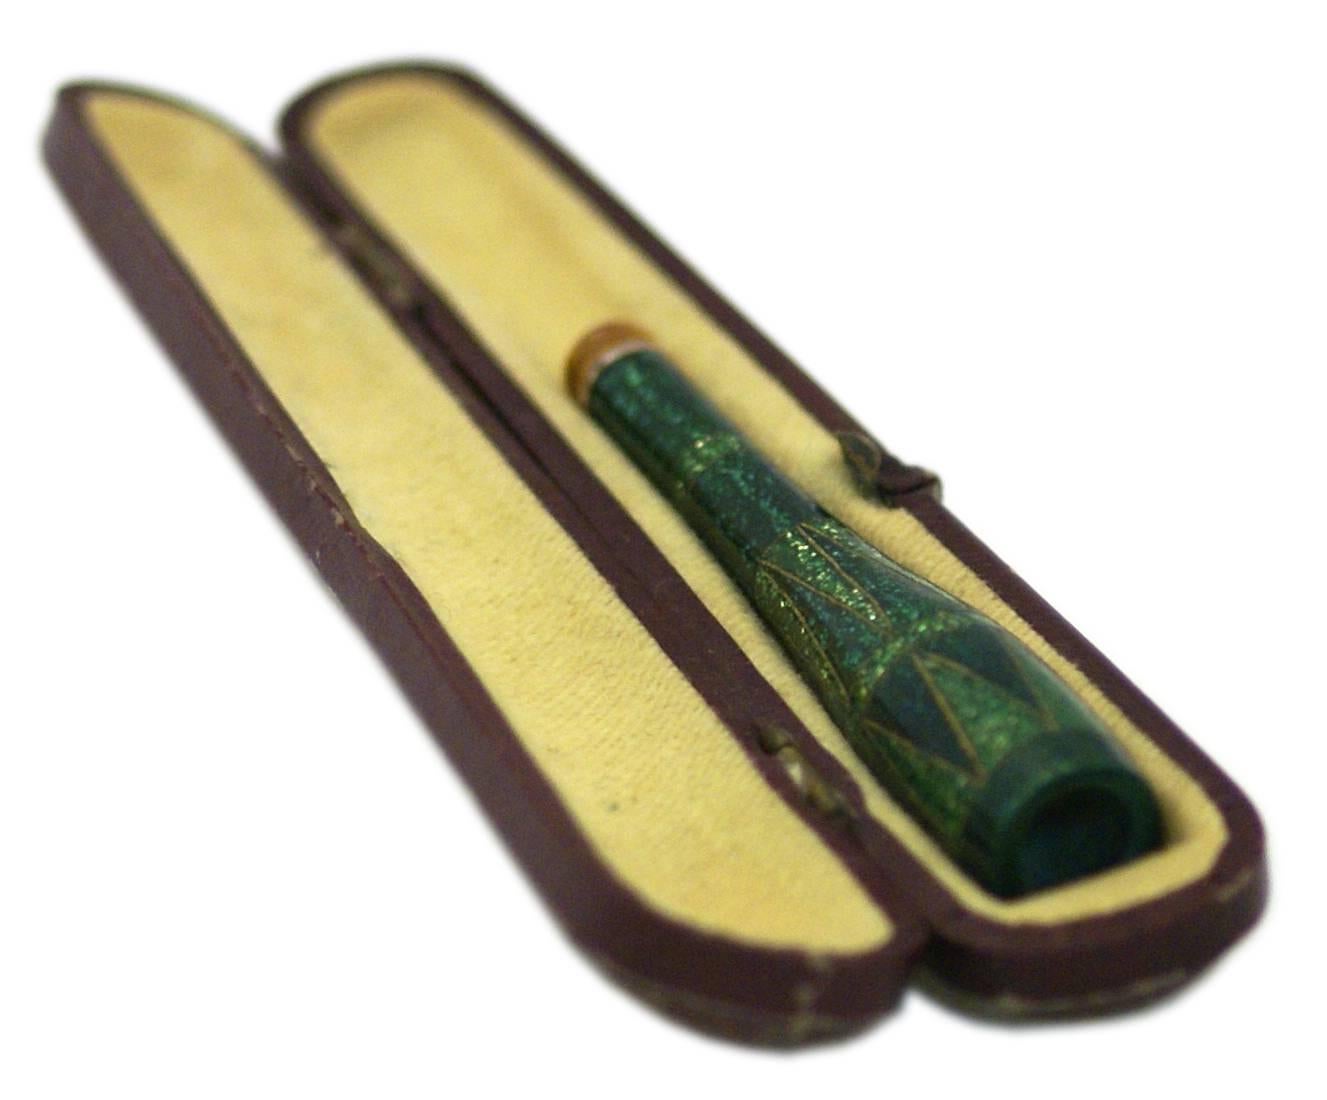 A chic green bachelite cigarette holder of geometrical design, circa 1950, in its original box.